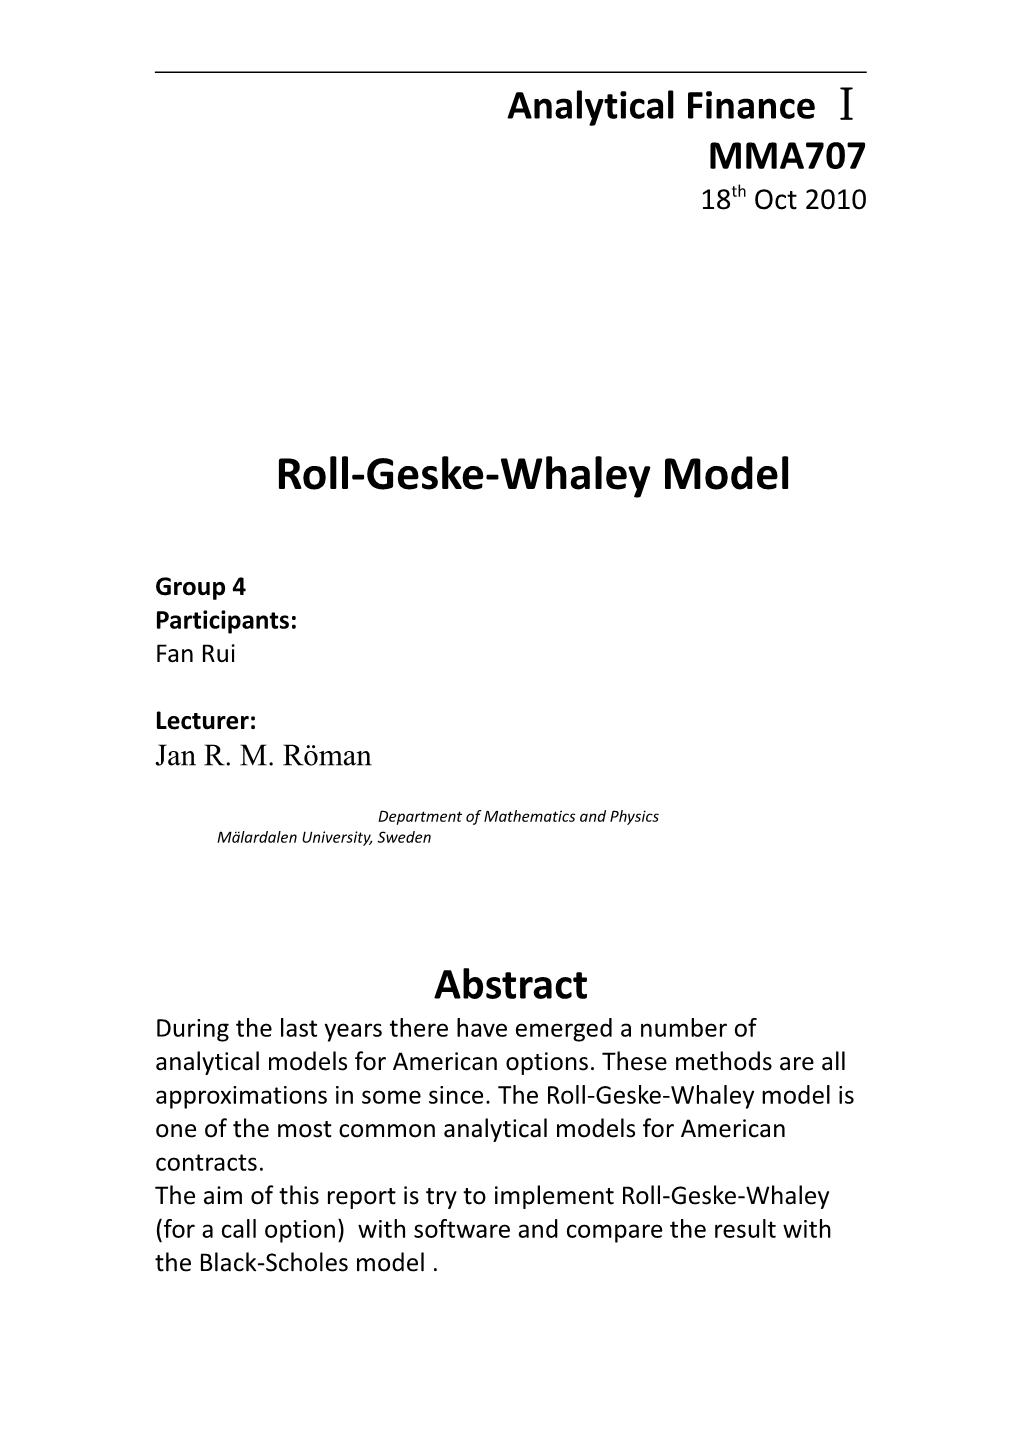 Seminar Topic: Roll-Geske-Whaley Modelgroup No: 4